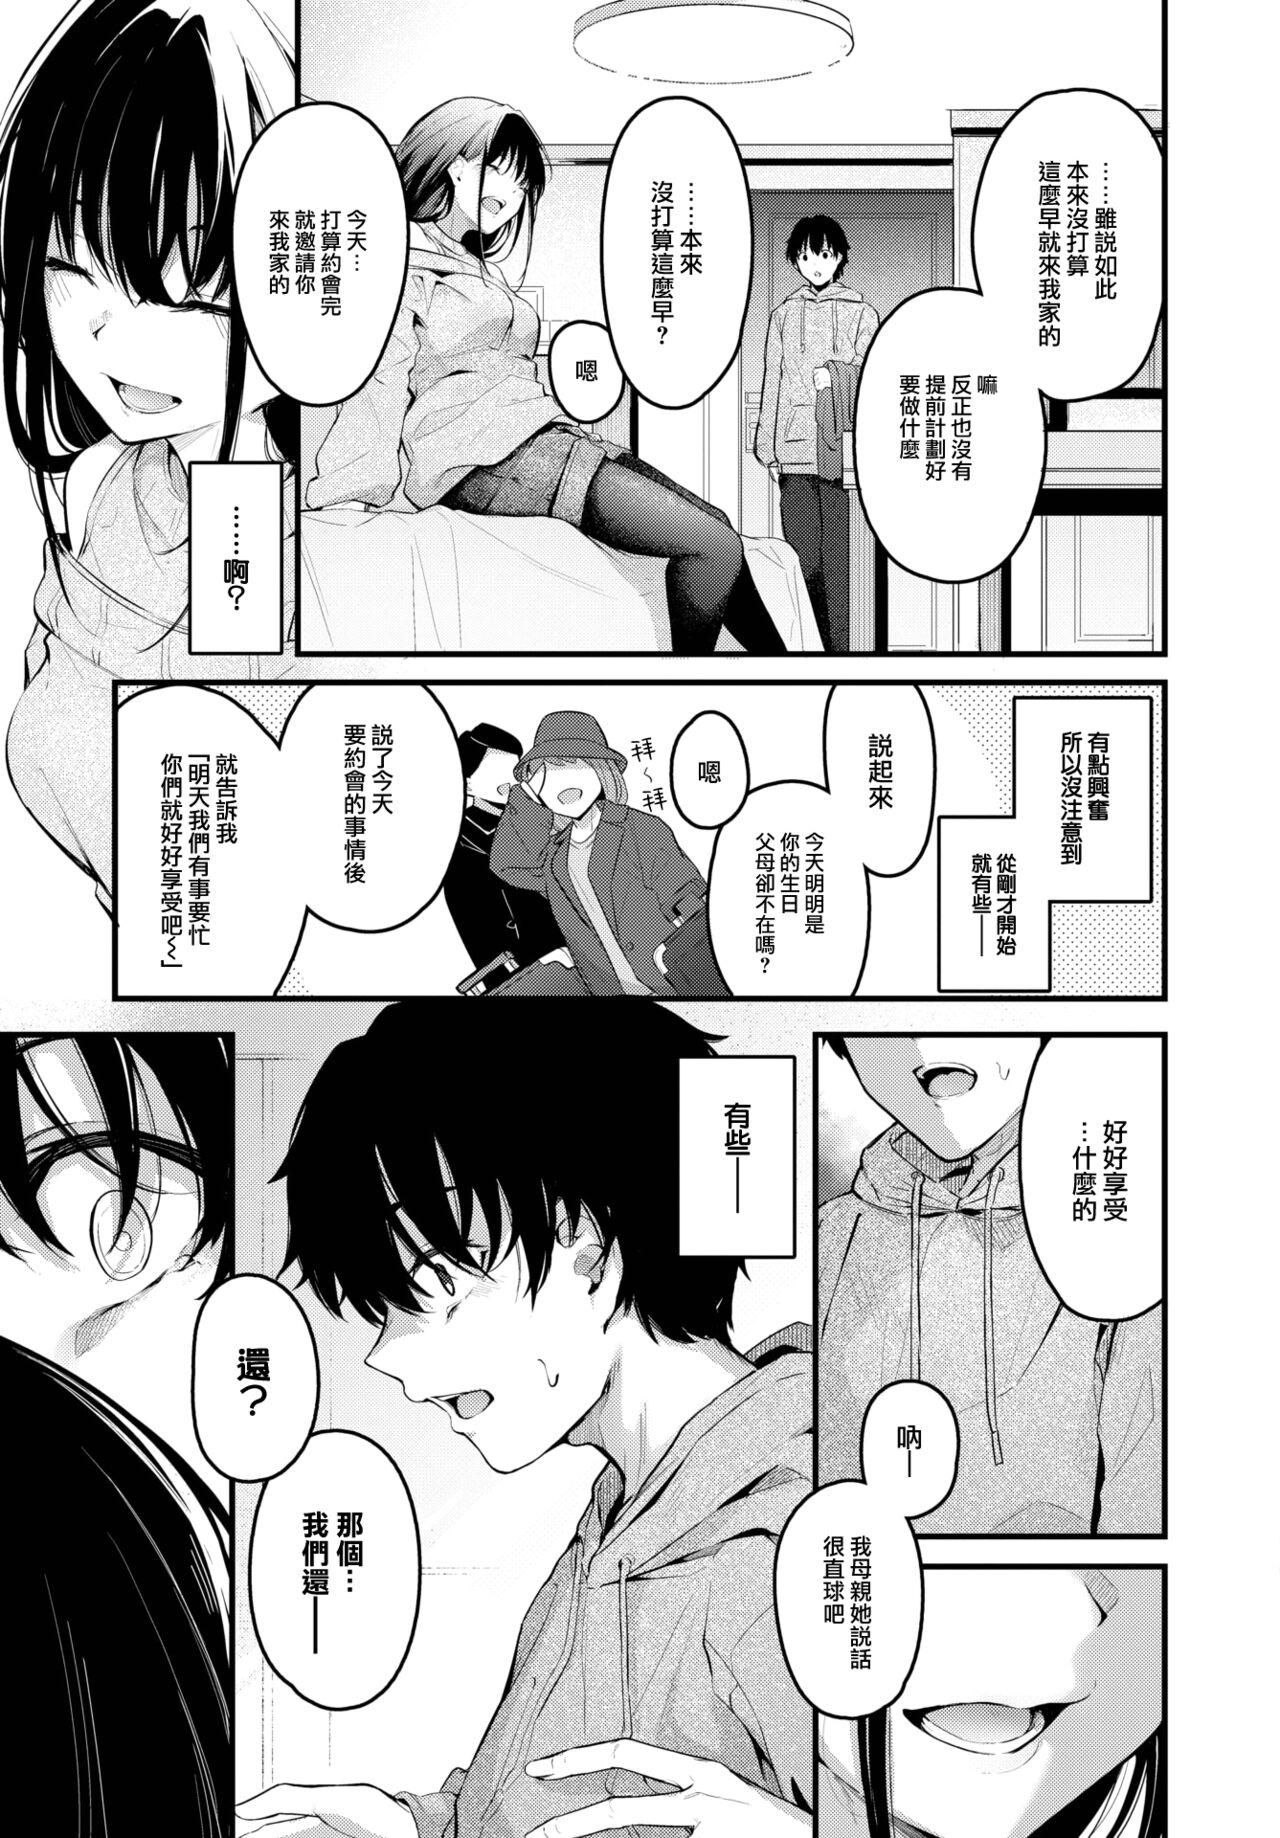 Licking Murashigure Com - Page 4